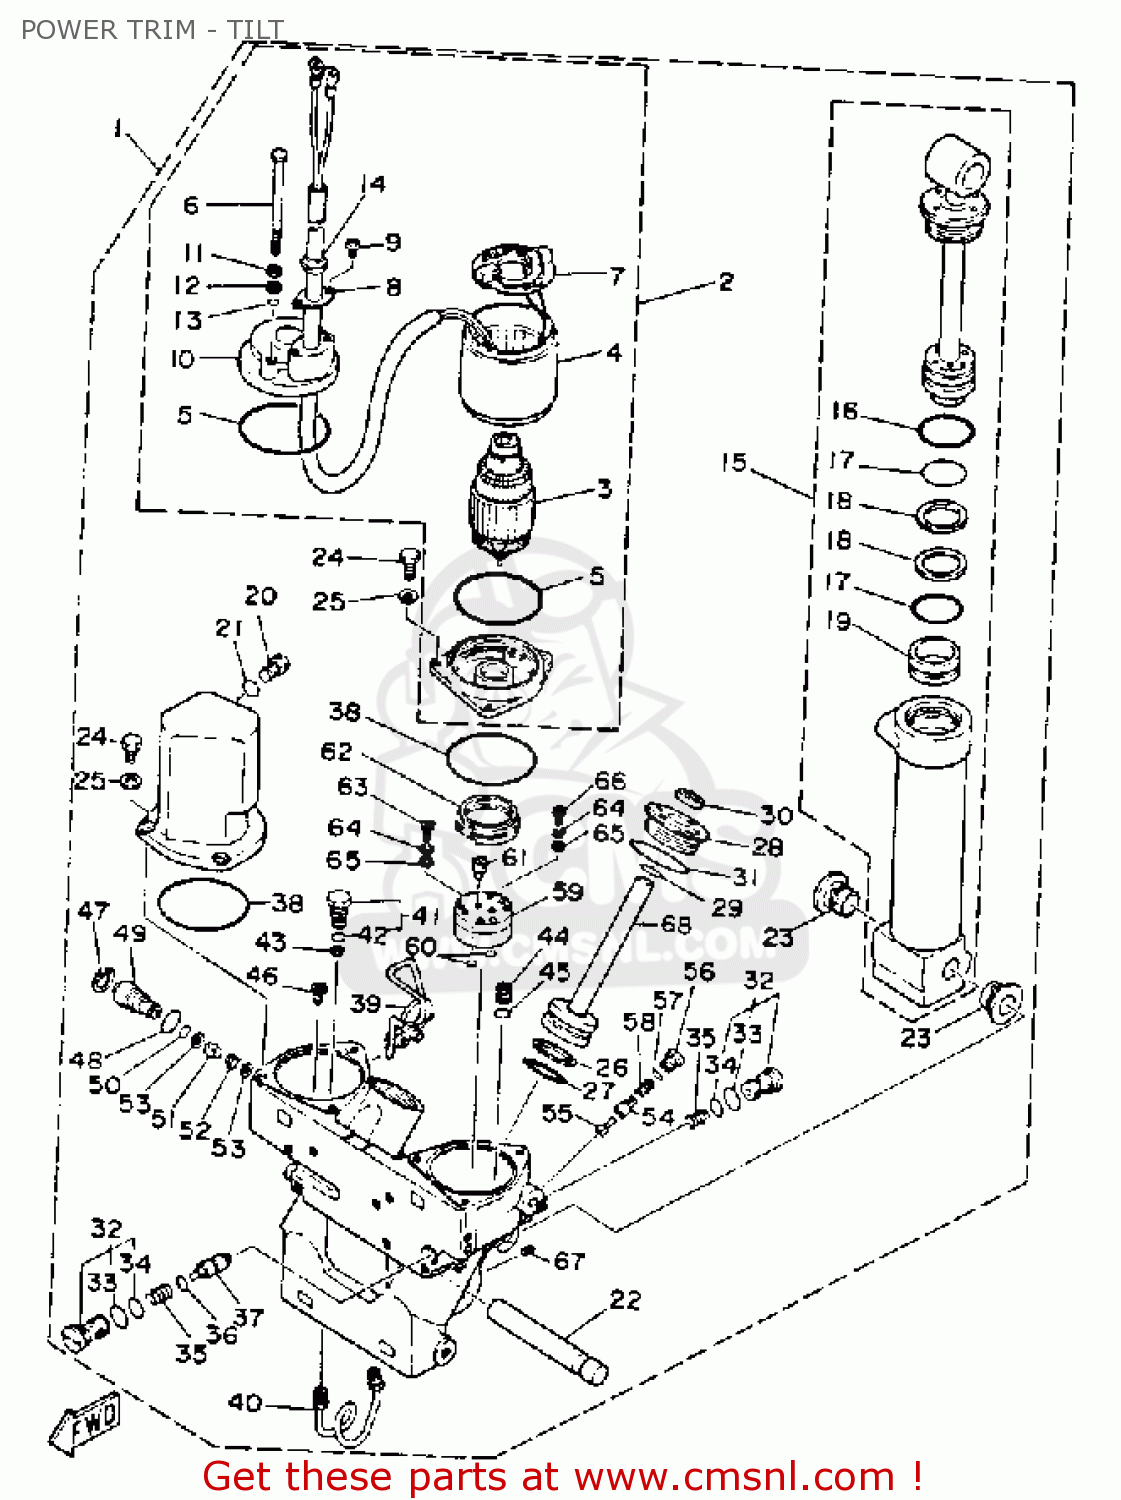 Yamaha 115/130 ETG 1988 POWER TRIM - TILT - buy original ... wiring diagram for mercury power trim 